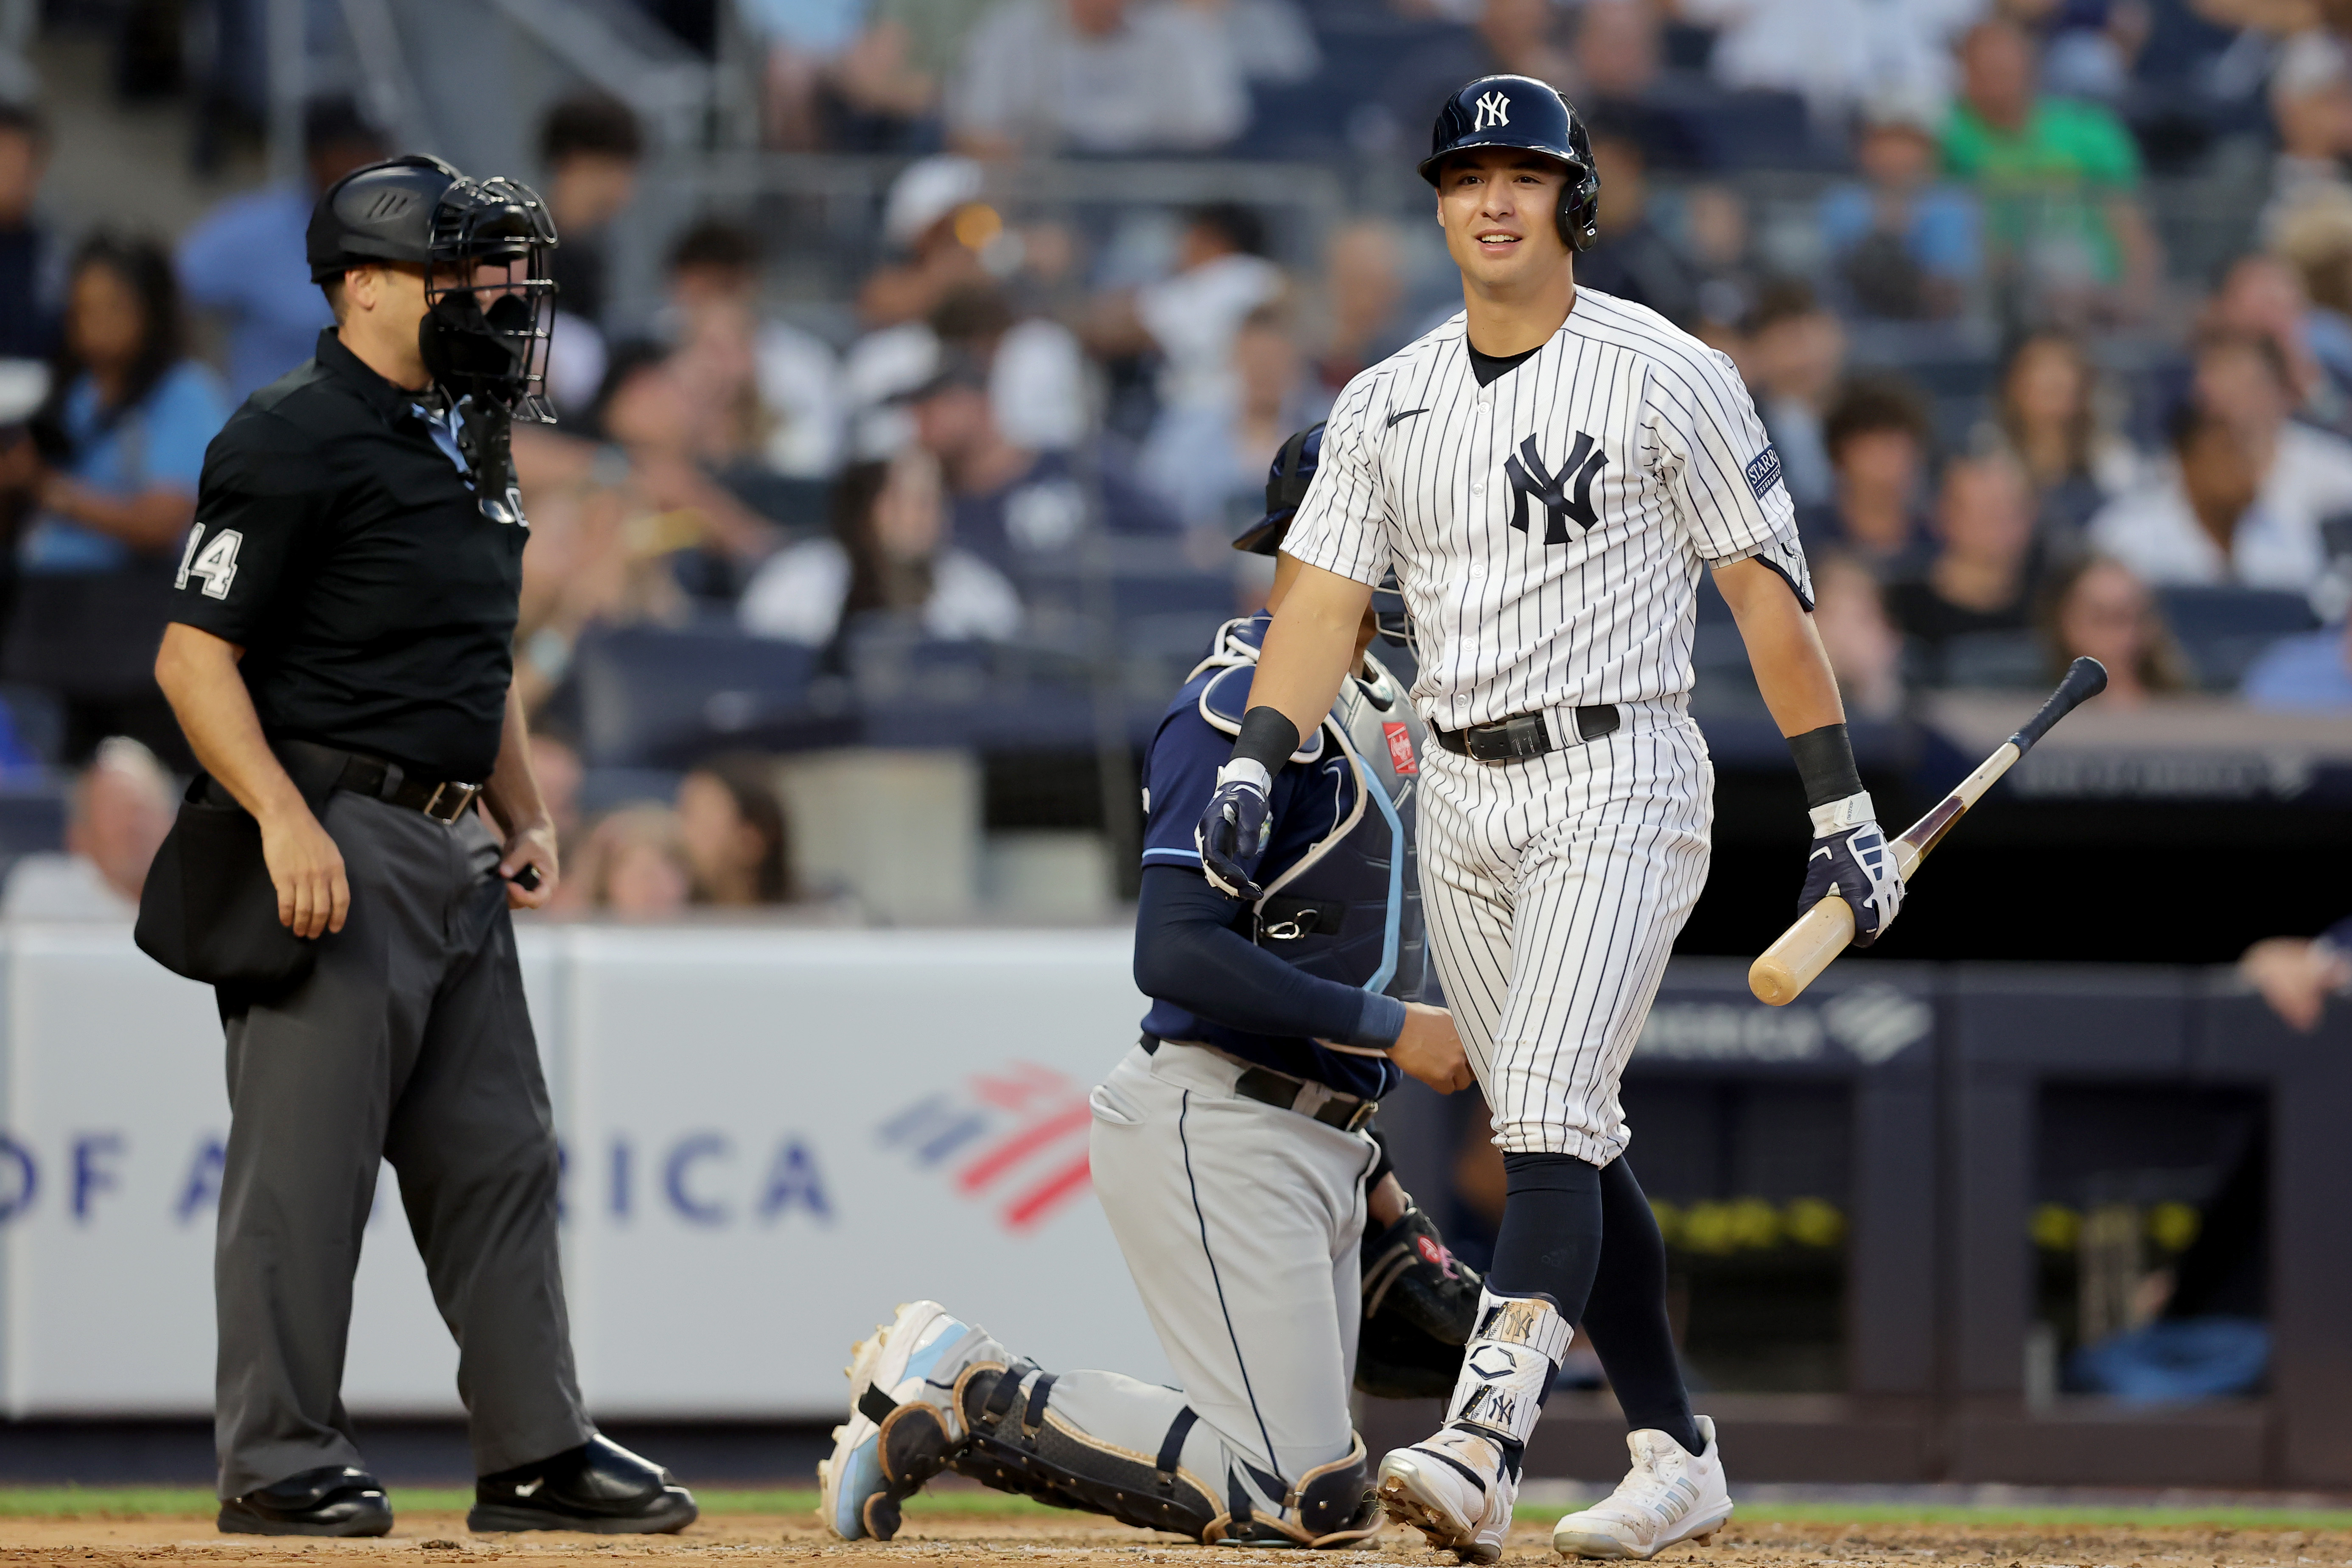 Zach Eflin, Rays shut down slumping Yankees